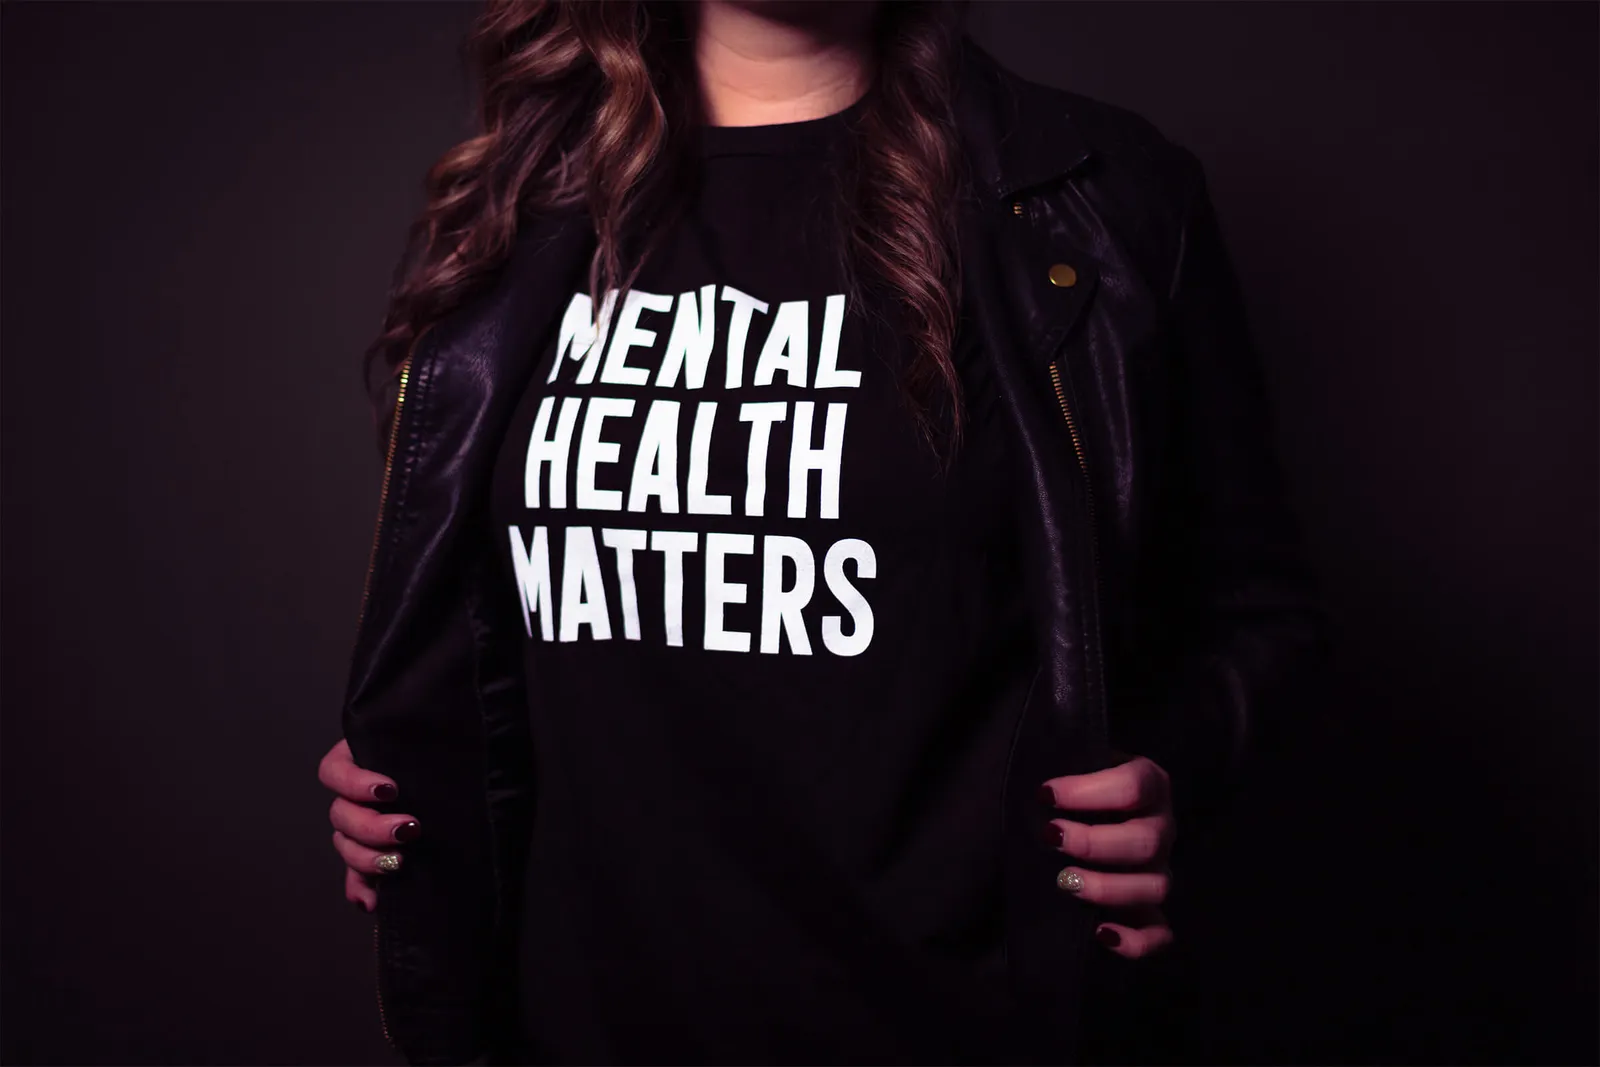 female wearing a black shirt reads mental health matters